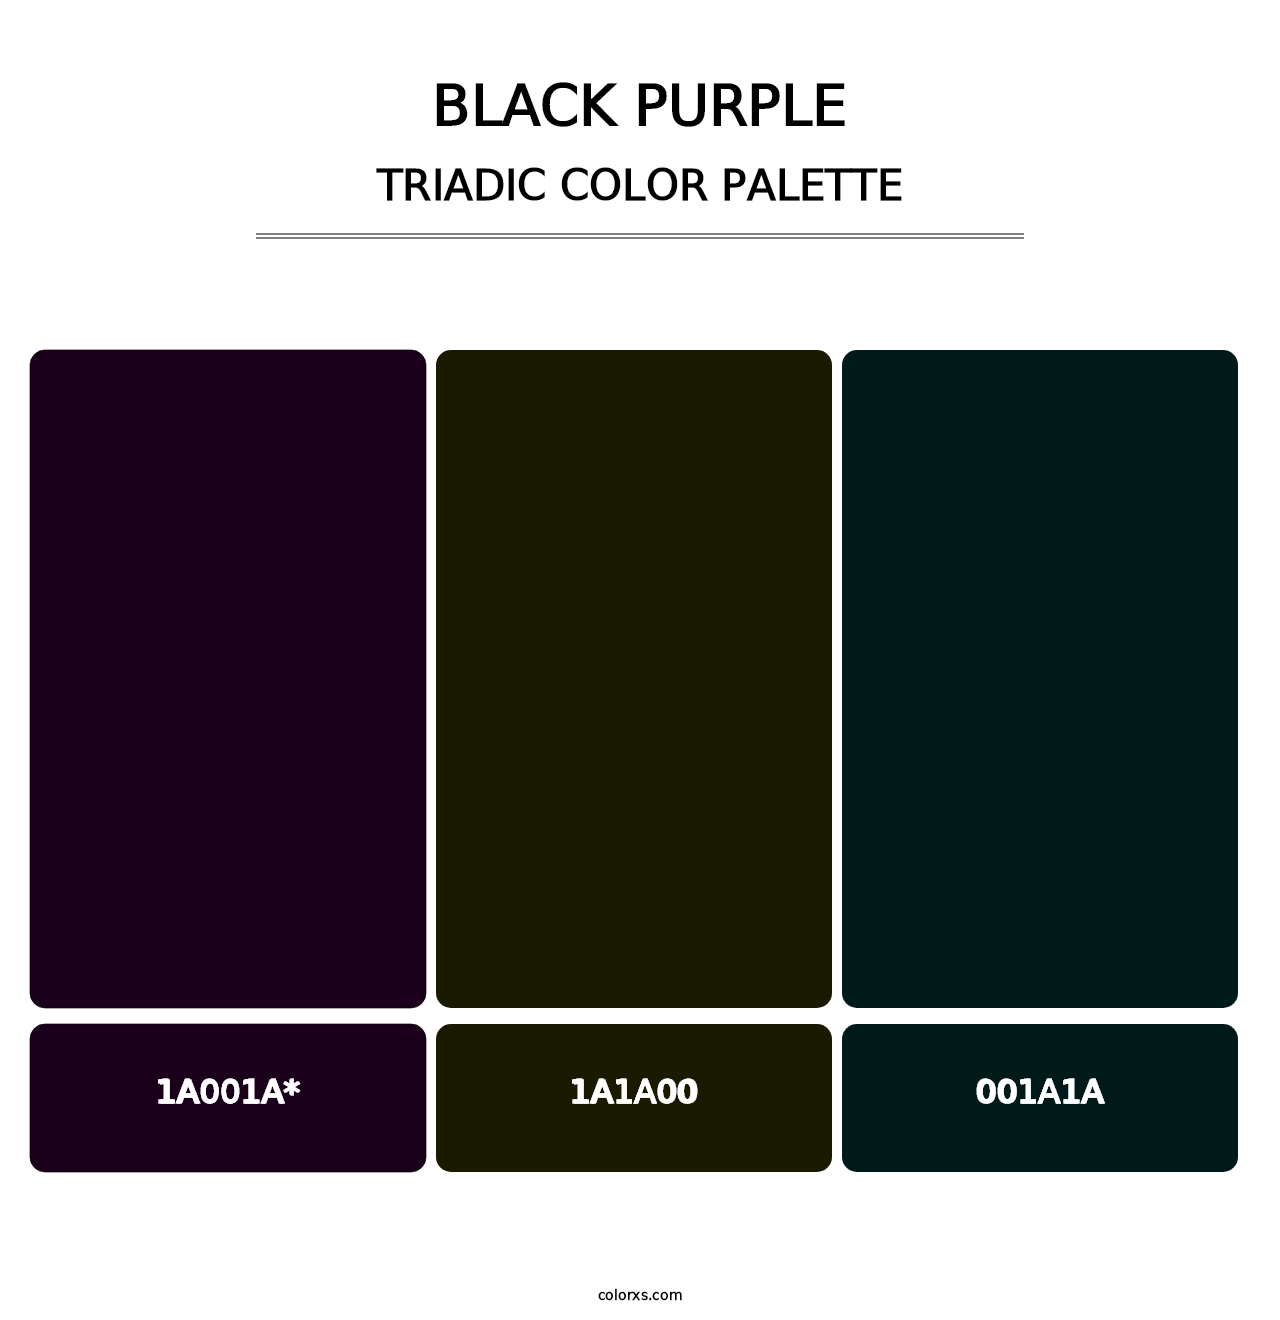 Black Purple - Triadic Color Palette